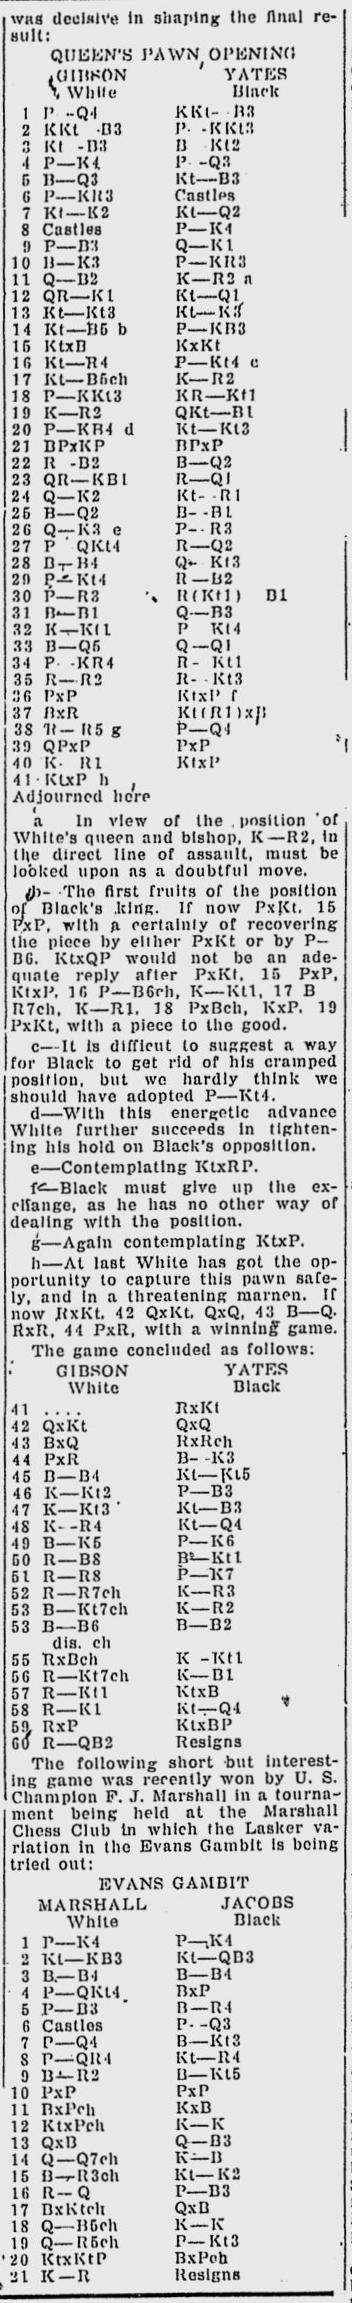 1923.10.27-03 Providence News.jpg